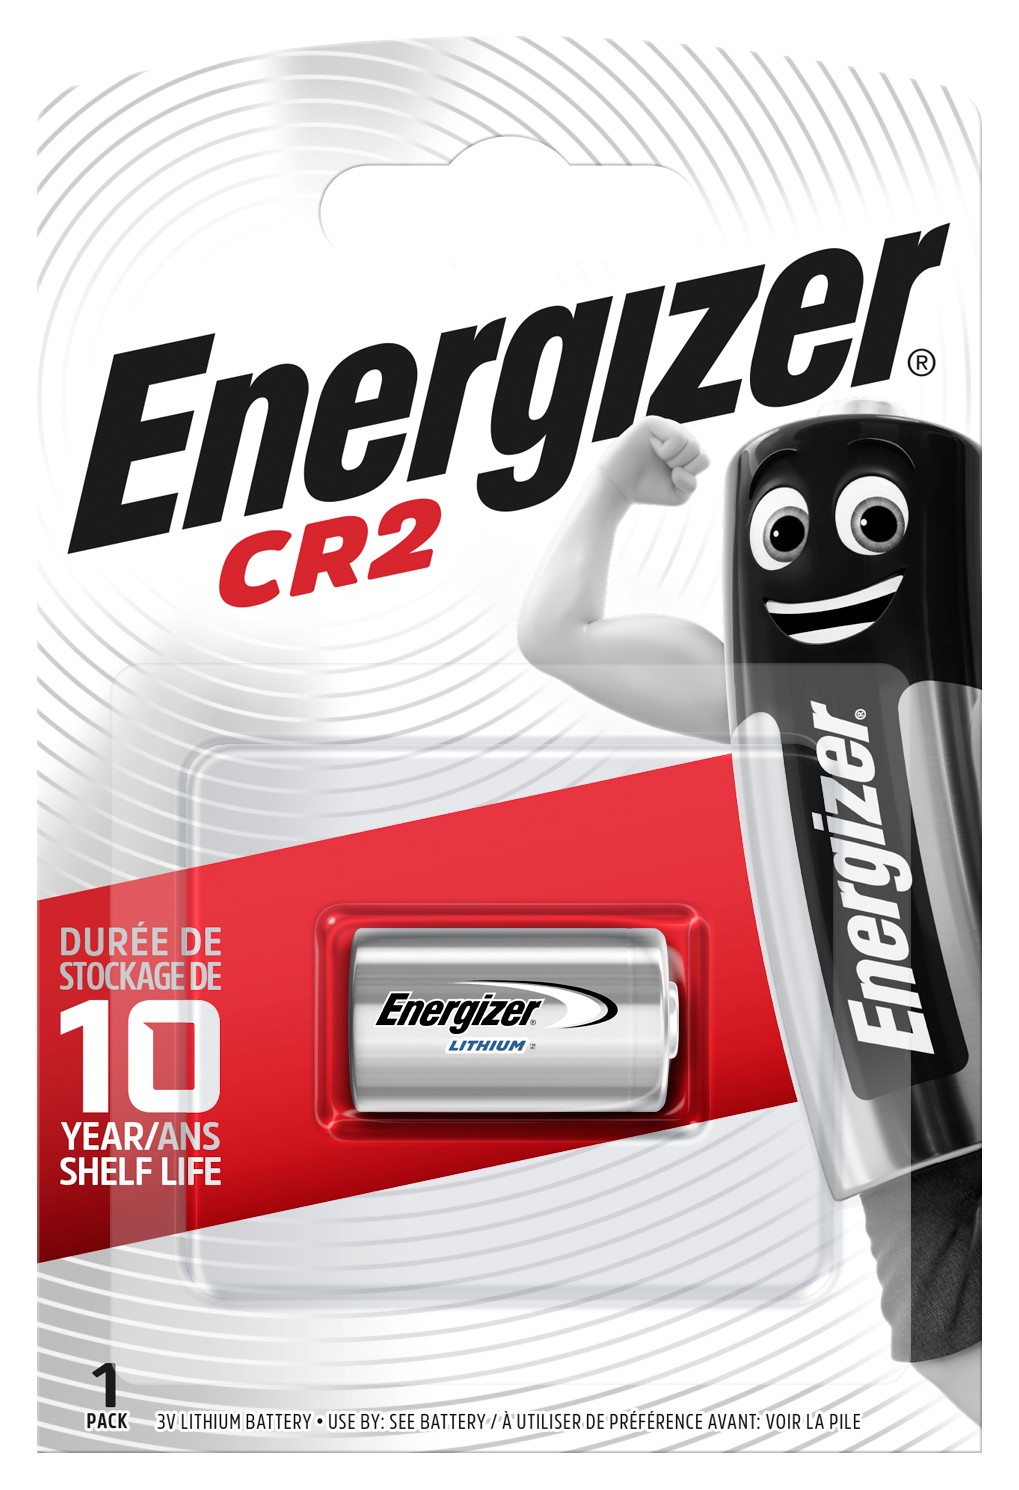 Lithiová baterie Energizer CR 2 baterie do obojku CR2 3V